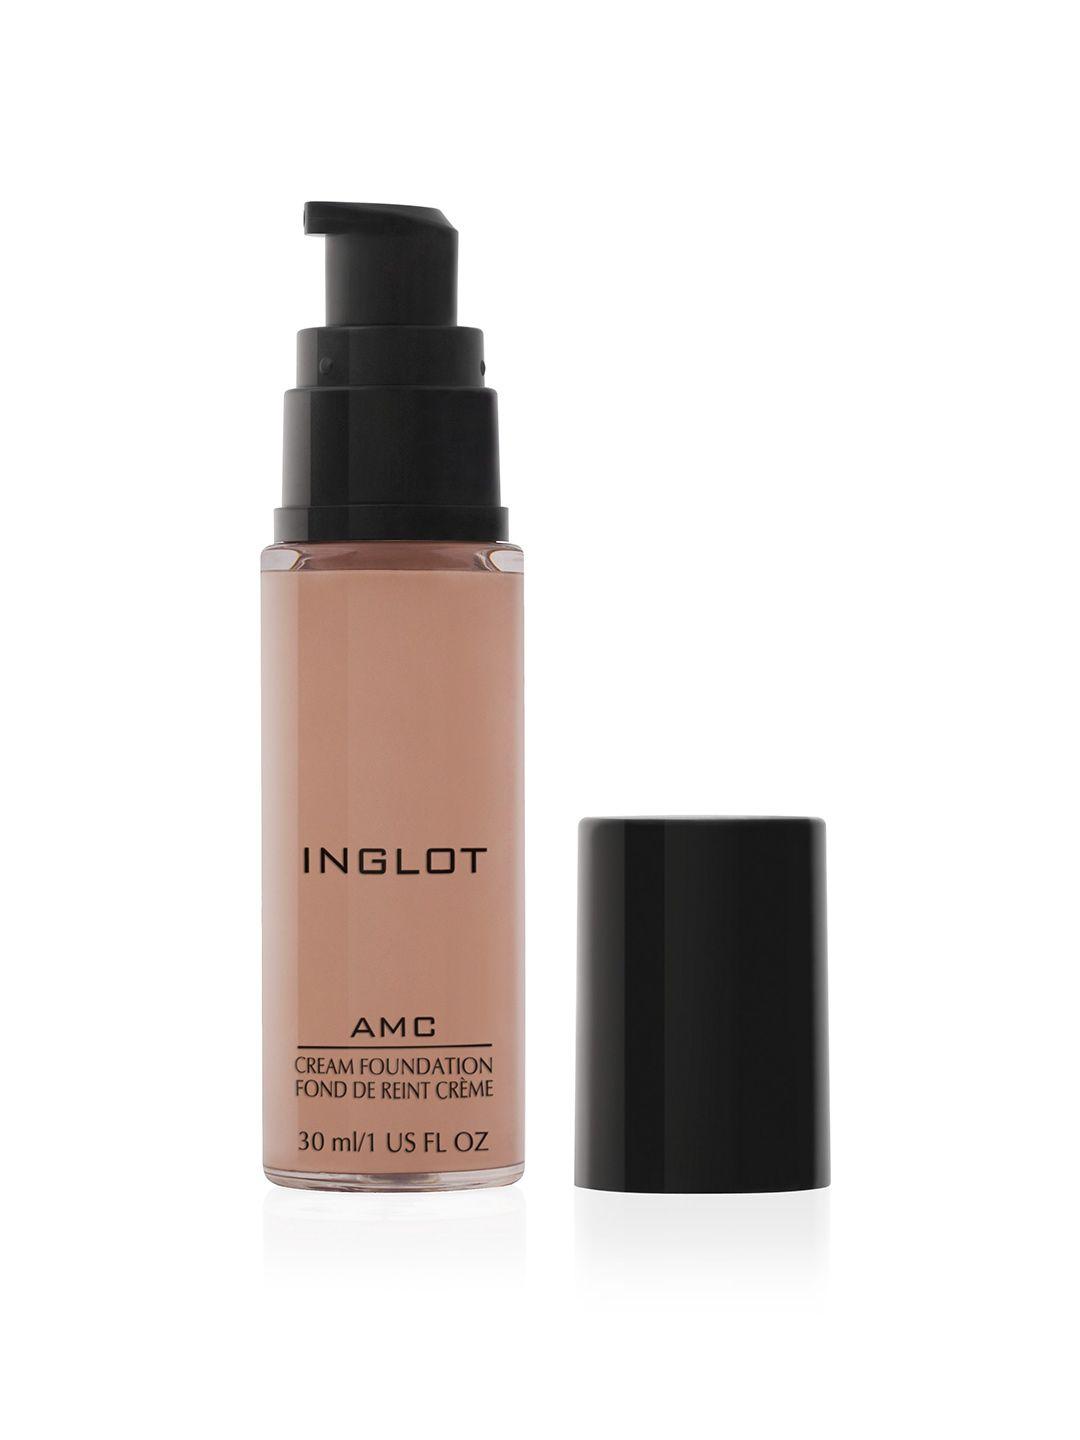 inglot amc cream foundation 30ml - nude lc 100